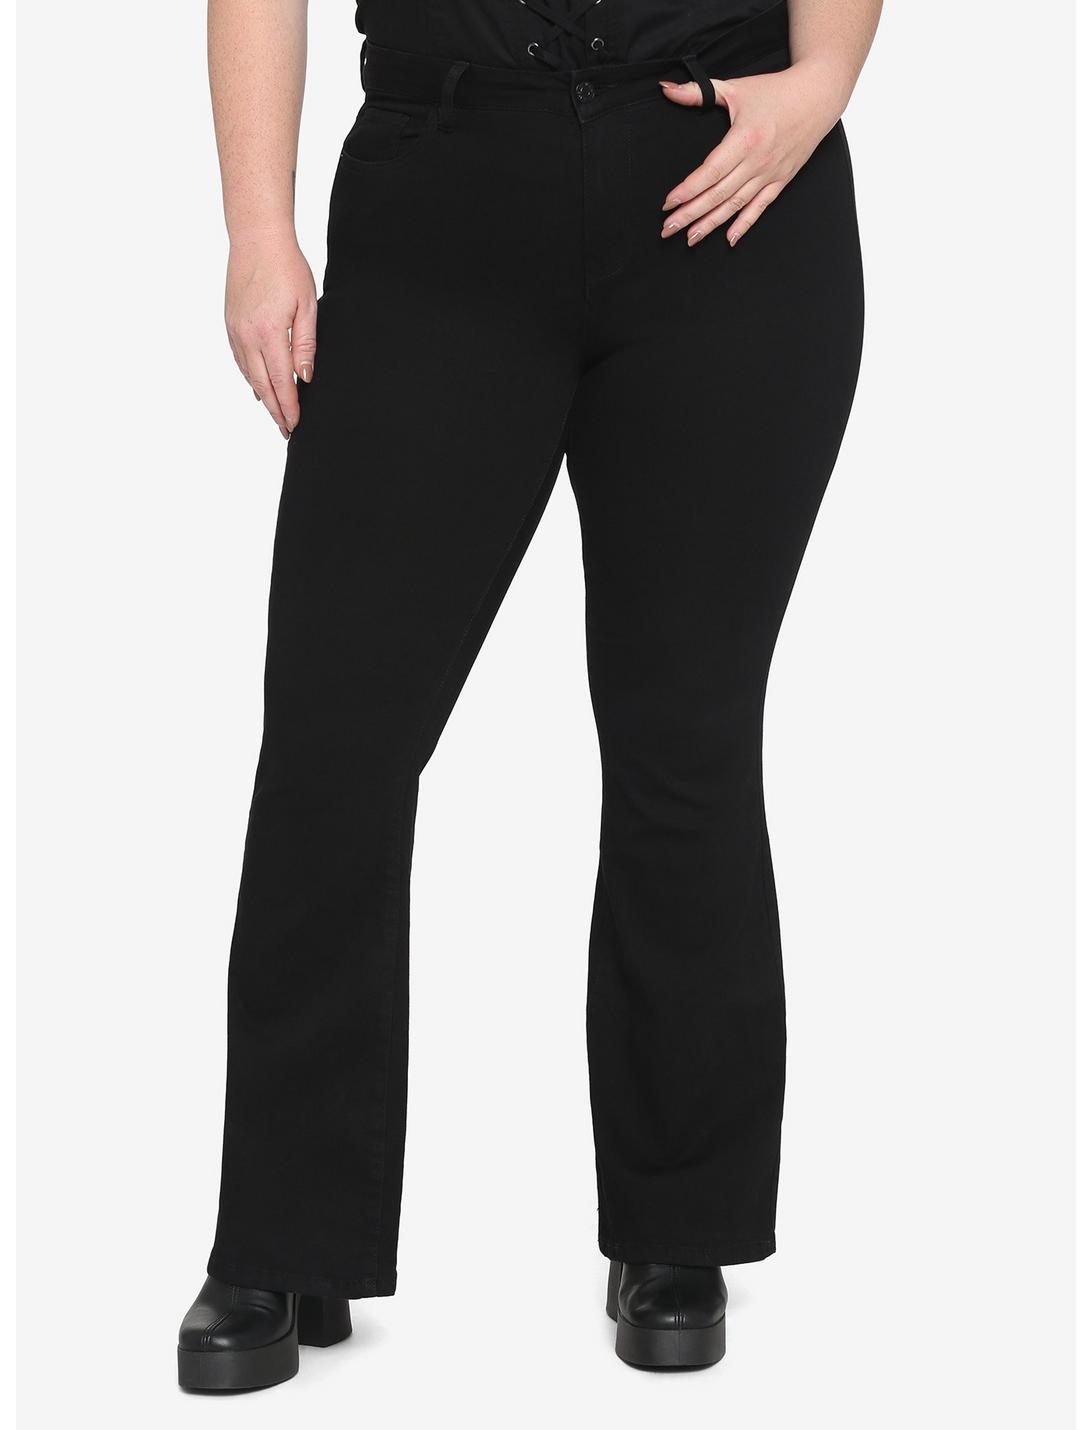 Black Flare Jeans Plus Size, BLACK, hi-res